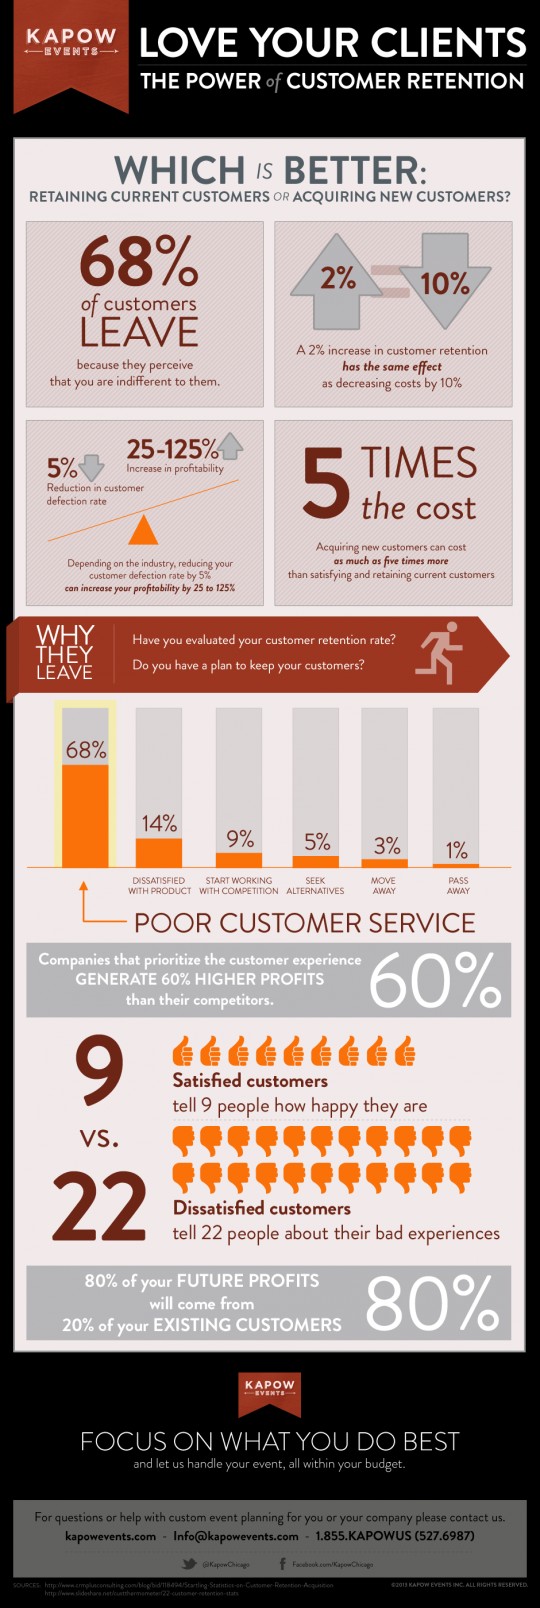 The power of customer retention